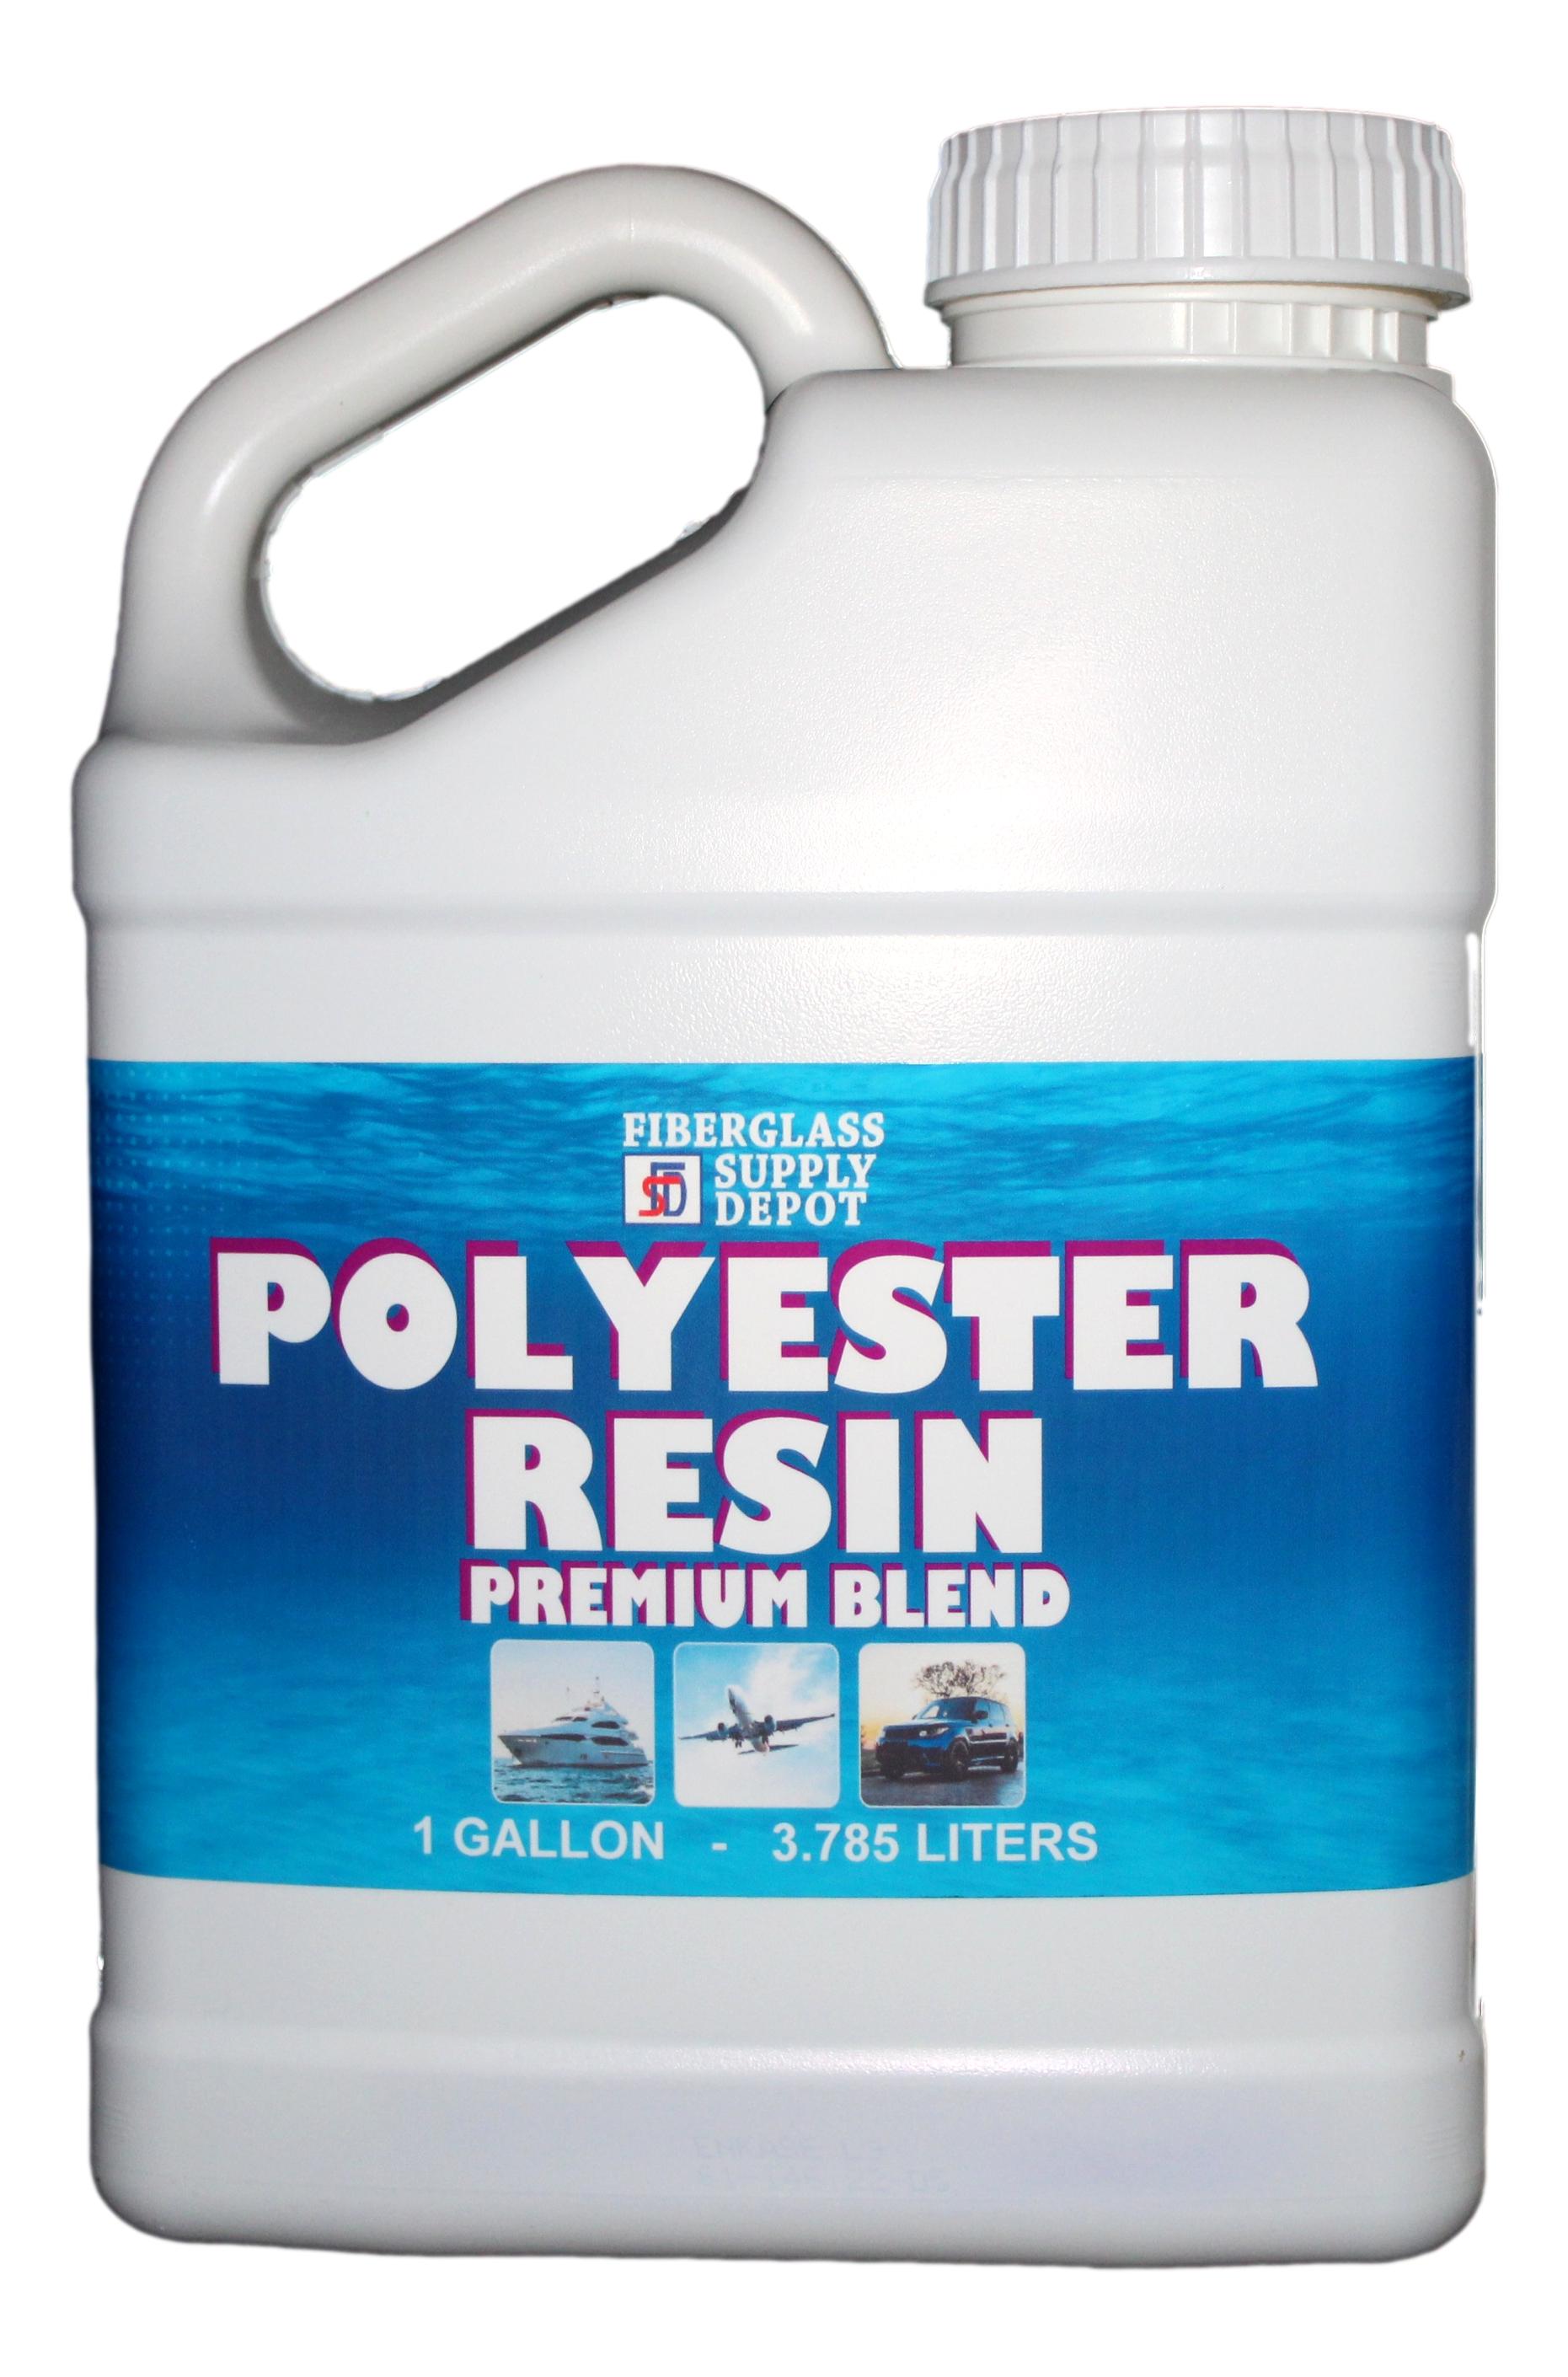 Fiberglass Supply Depot Inc. > Polyester Resins > Polyester Resin